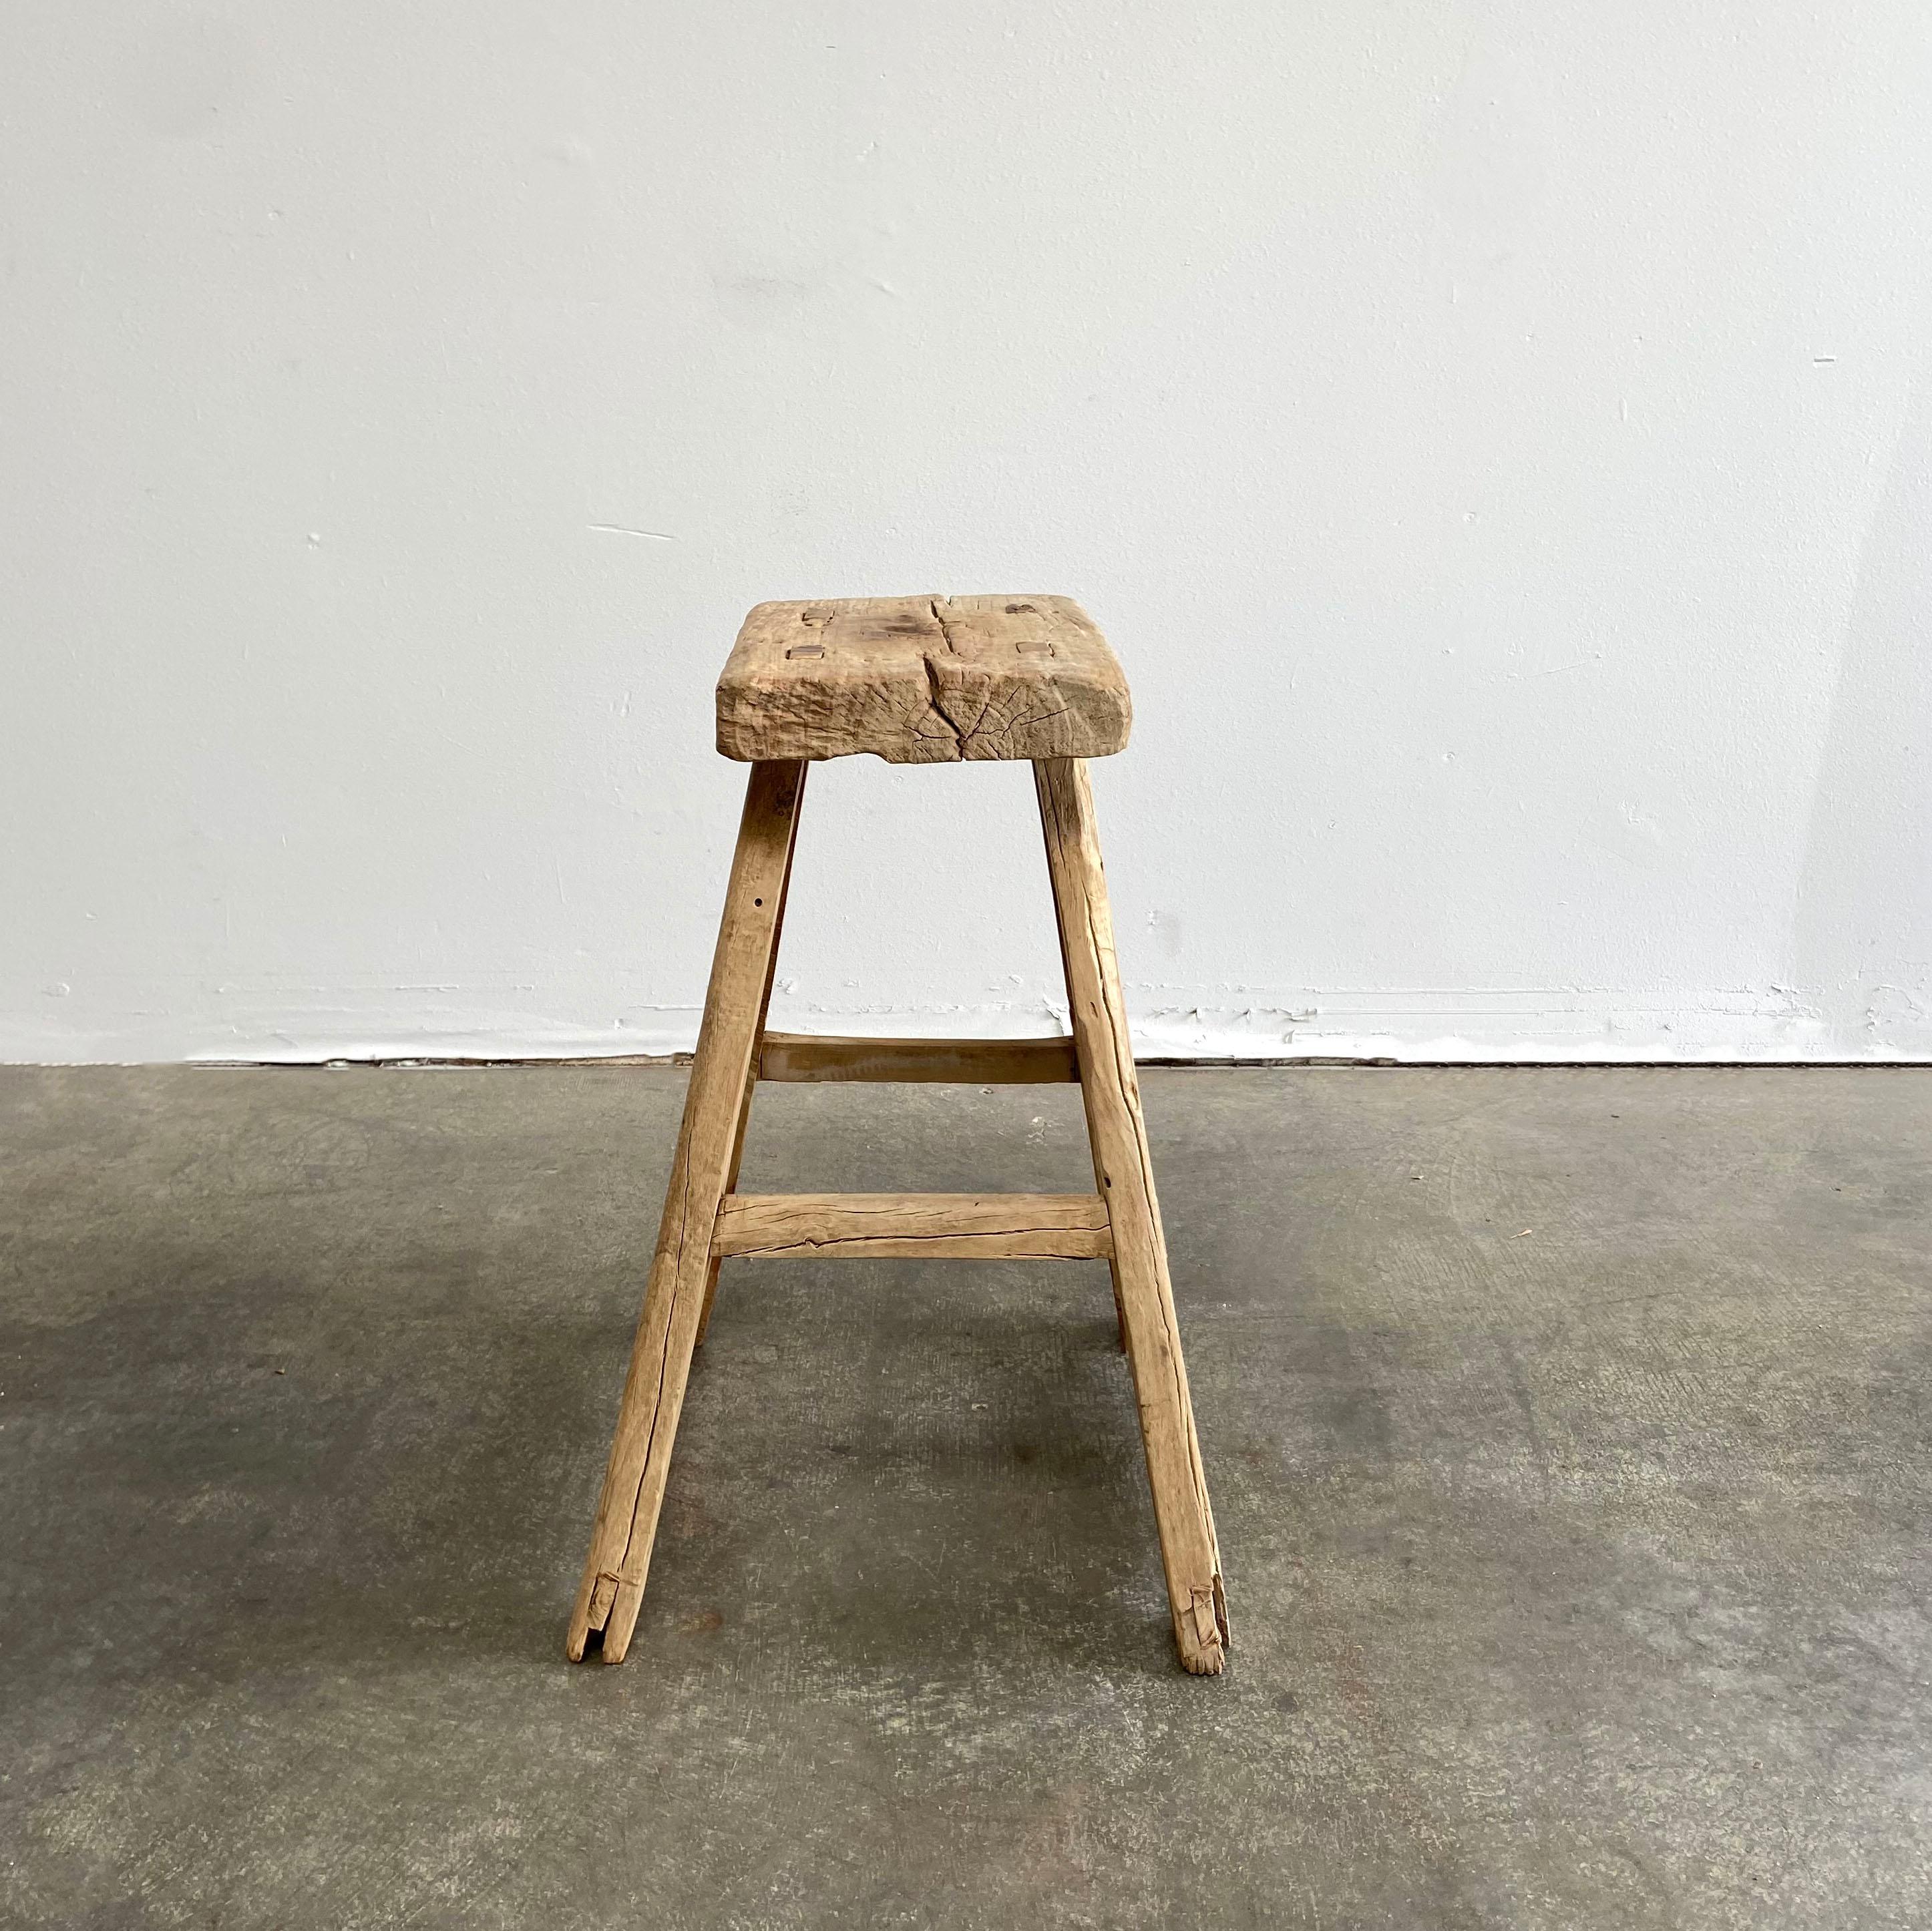 Vintage elm wood tall stool or pedestal side table.
Measures: 18” W x 16” D x 24.5